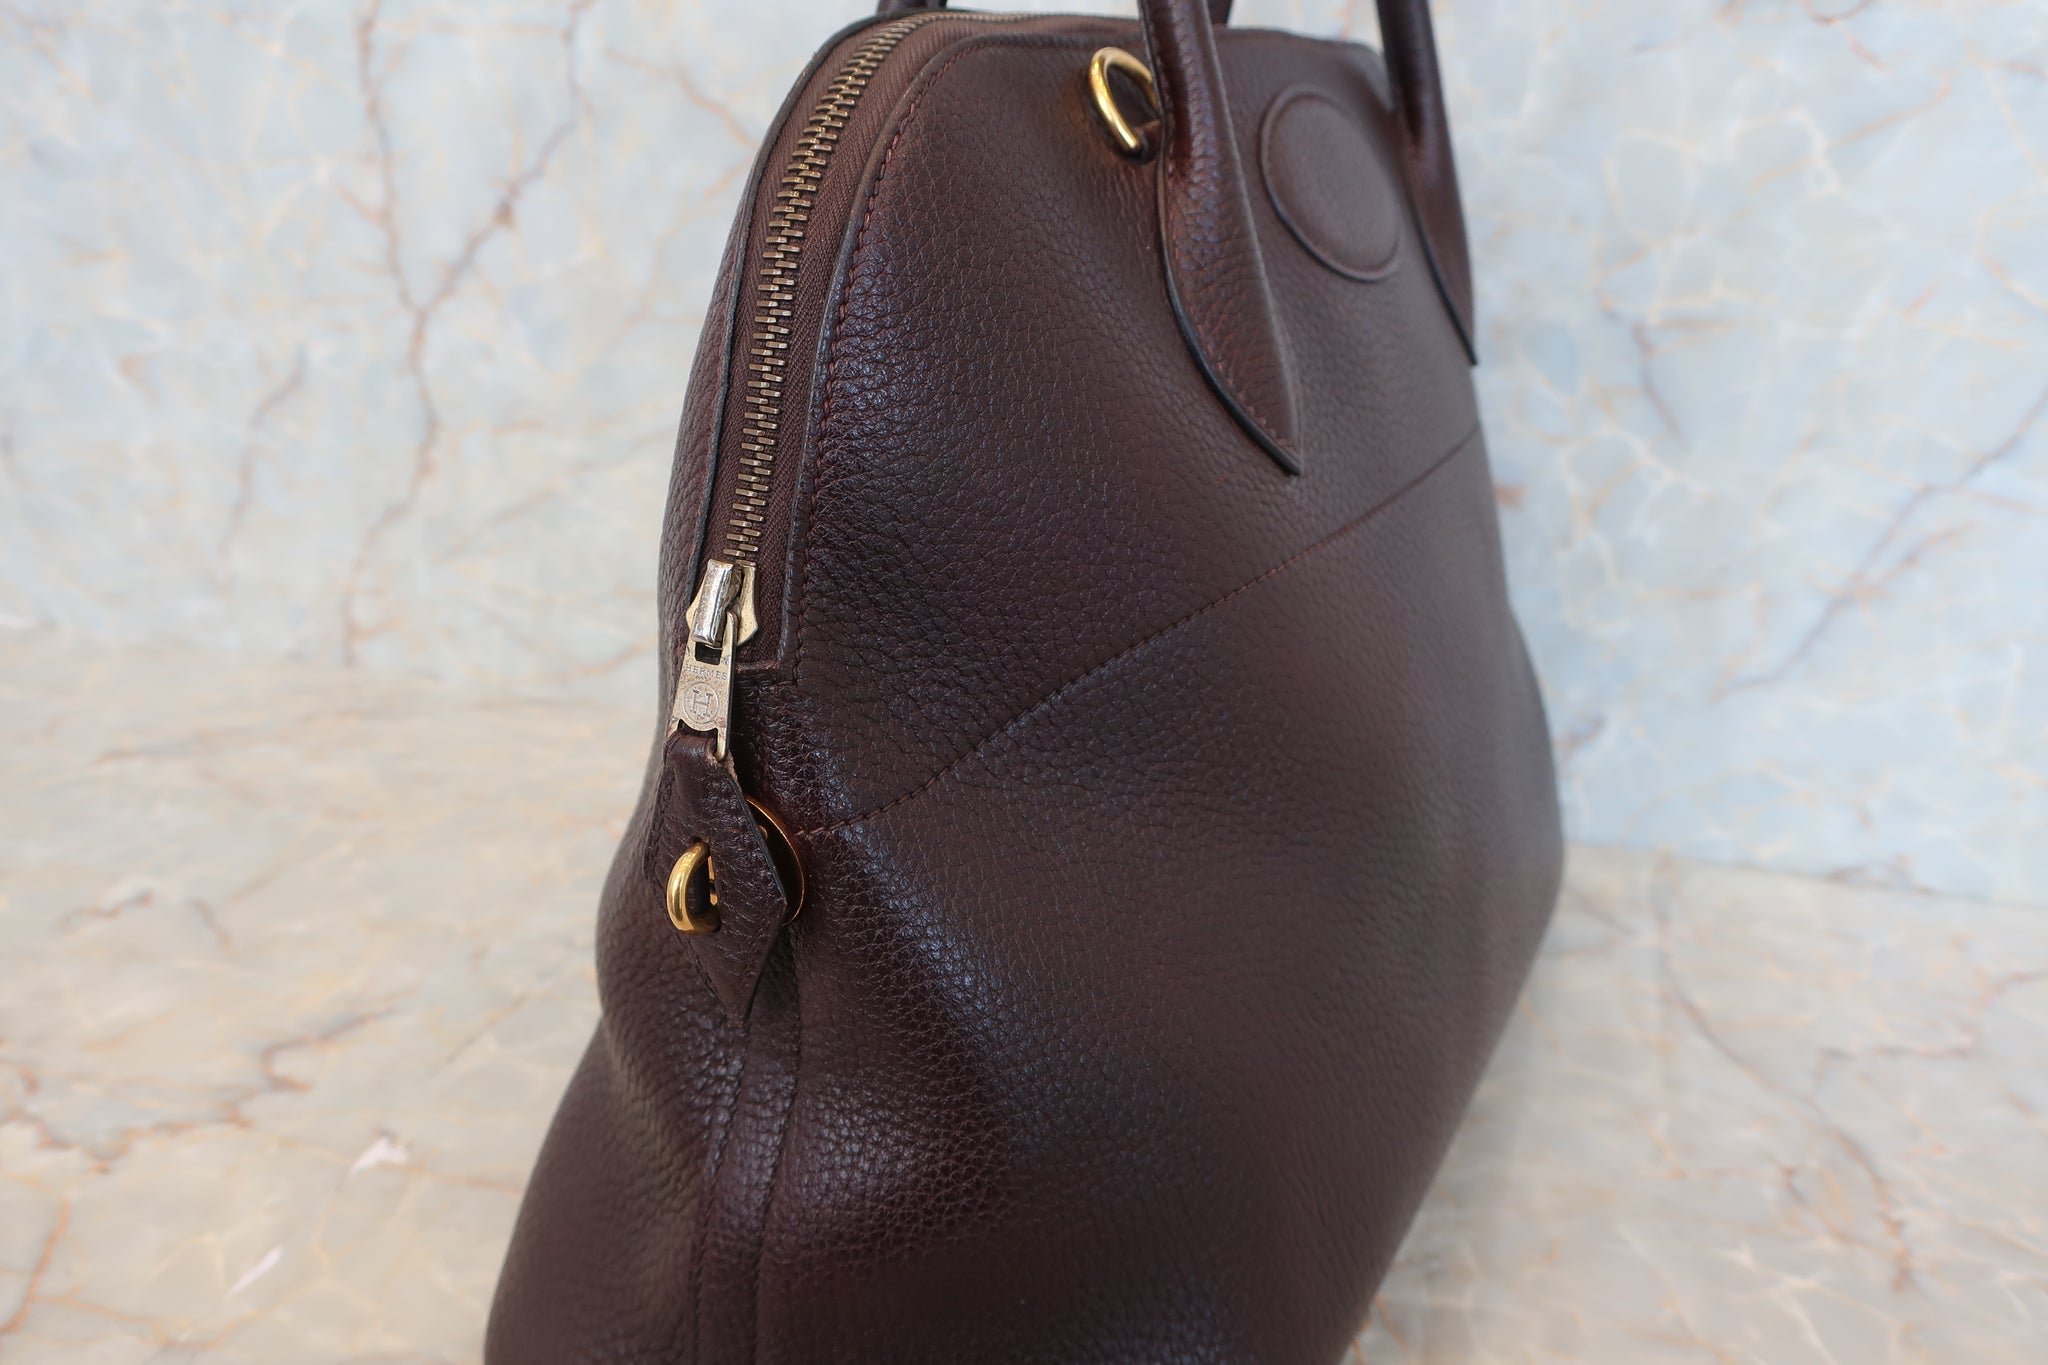 Hermes Fjord Leather Birkin Bag - 35 cm in Bordeaux